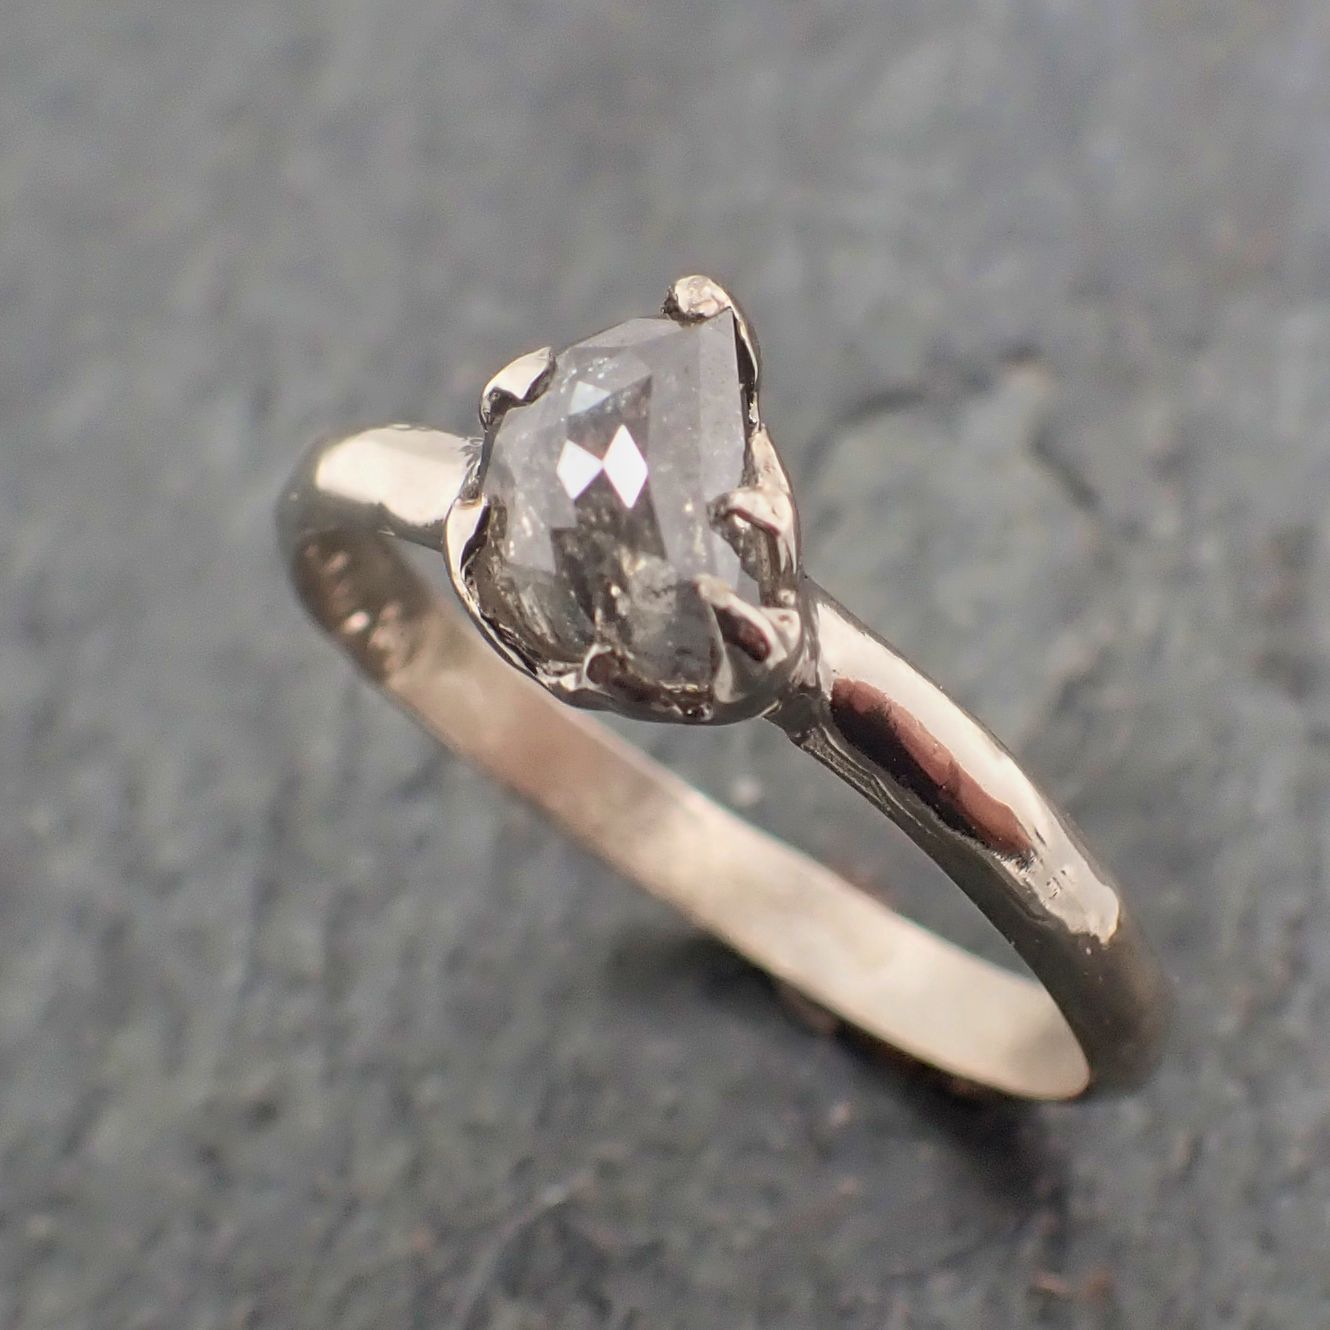 Fancy Cut Half Moon Diamond Solitaire Engagement 14k White Gold Wedding Ring byAngeline 2255